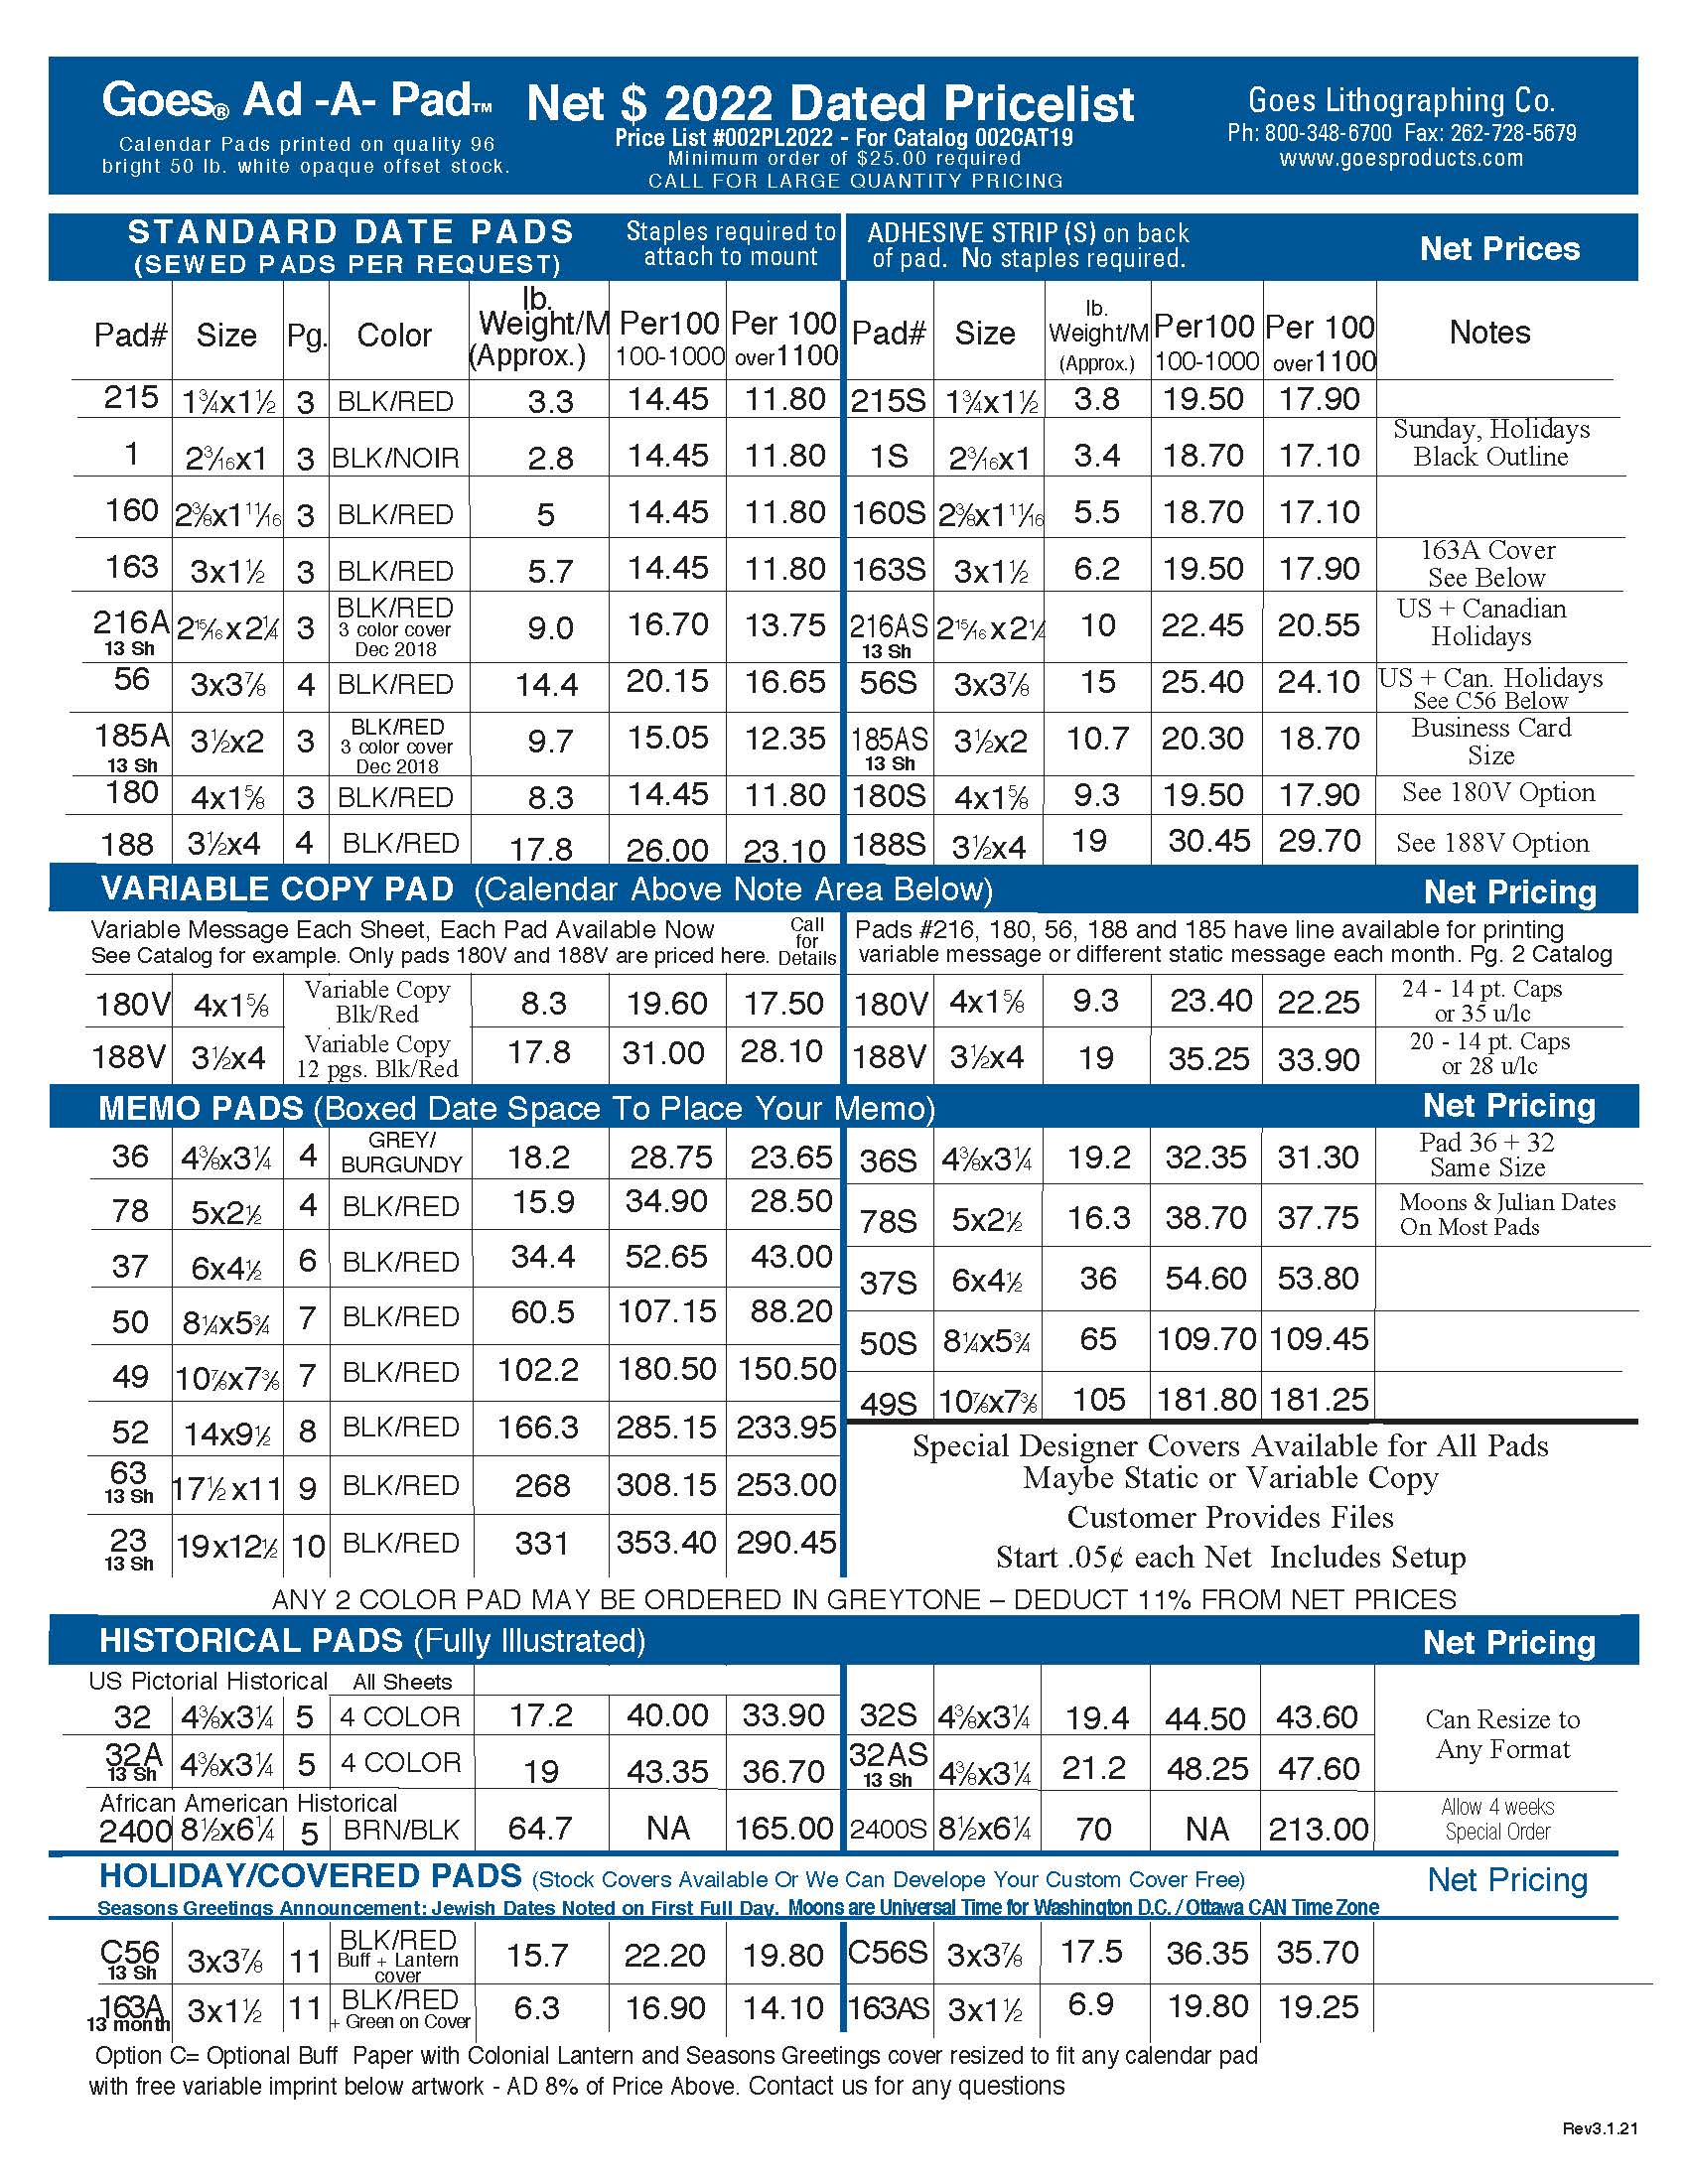 Calendar Pad Price List (2022)